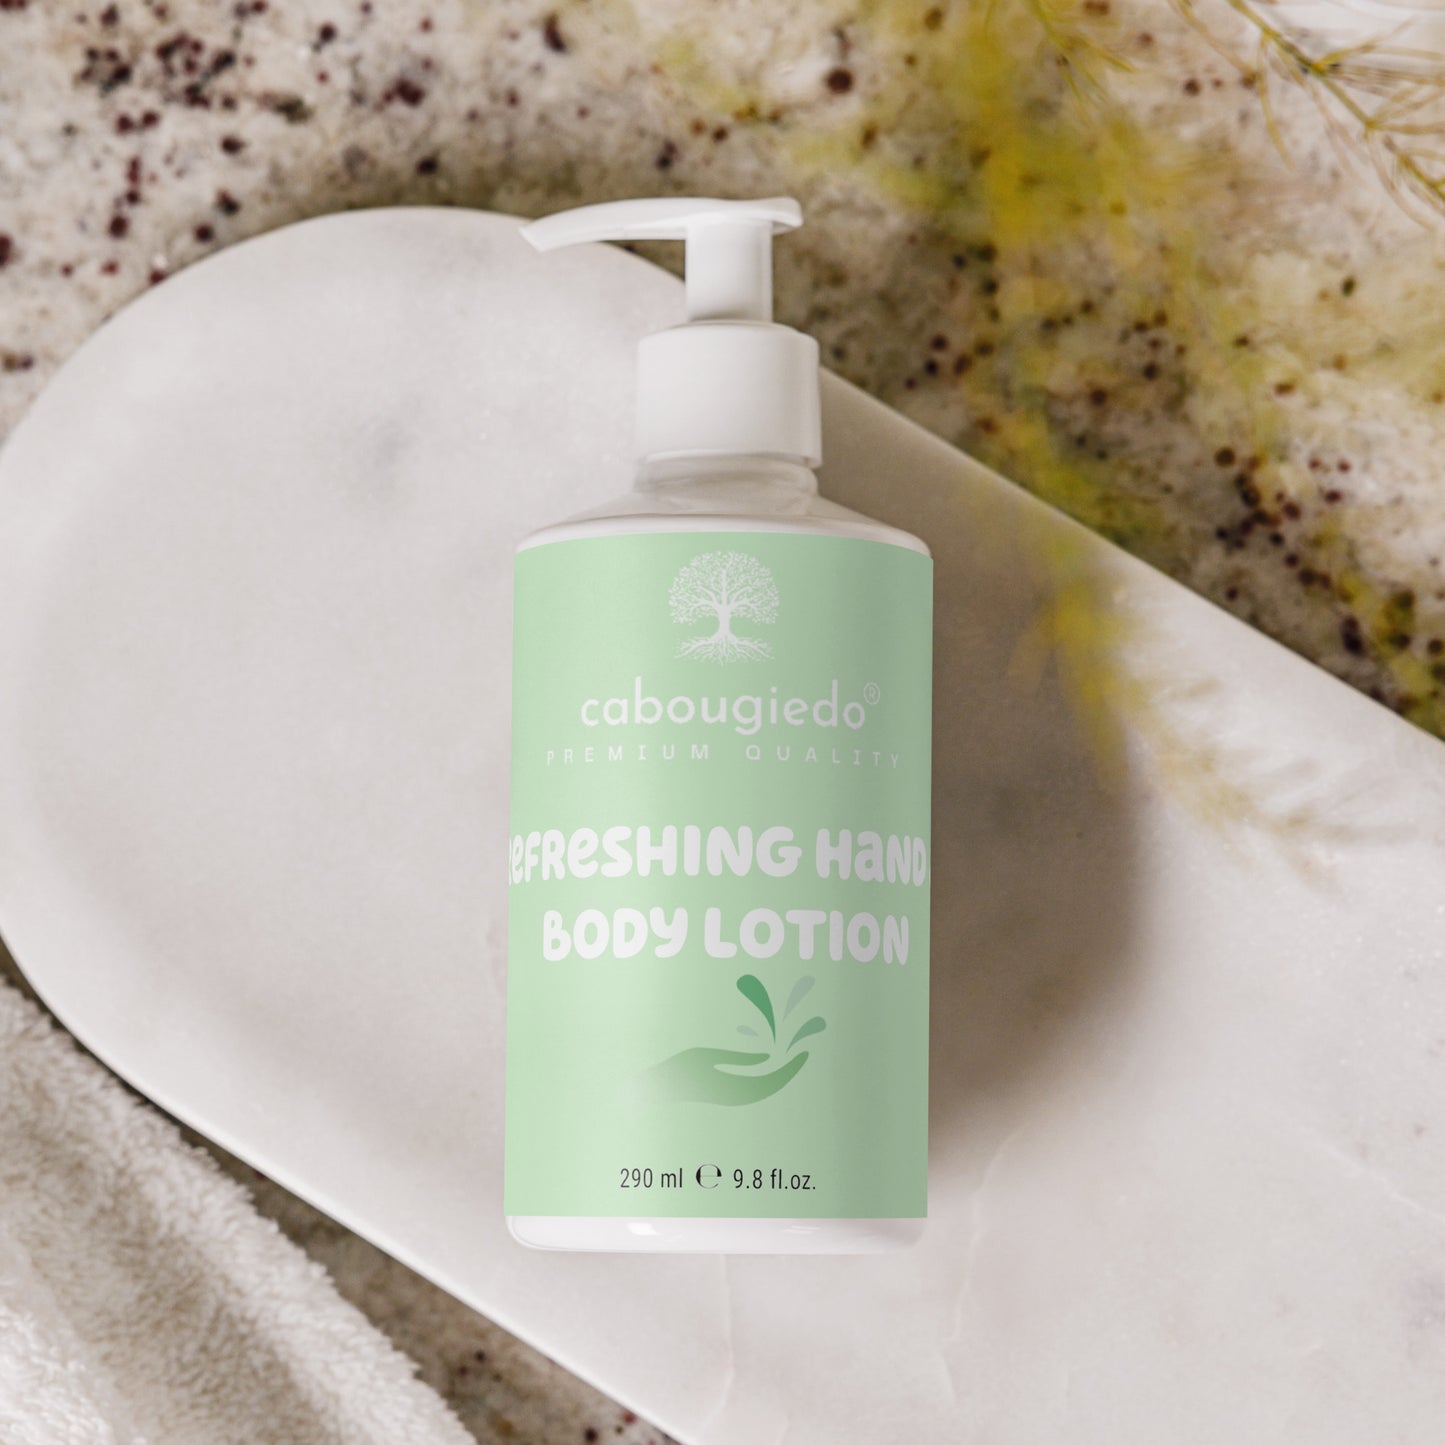 Refreshing hand & body lotion